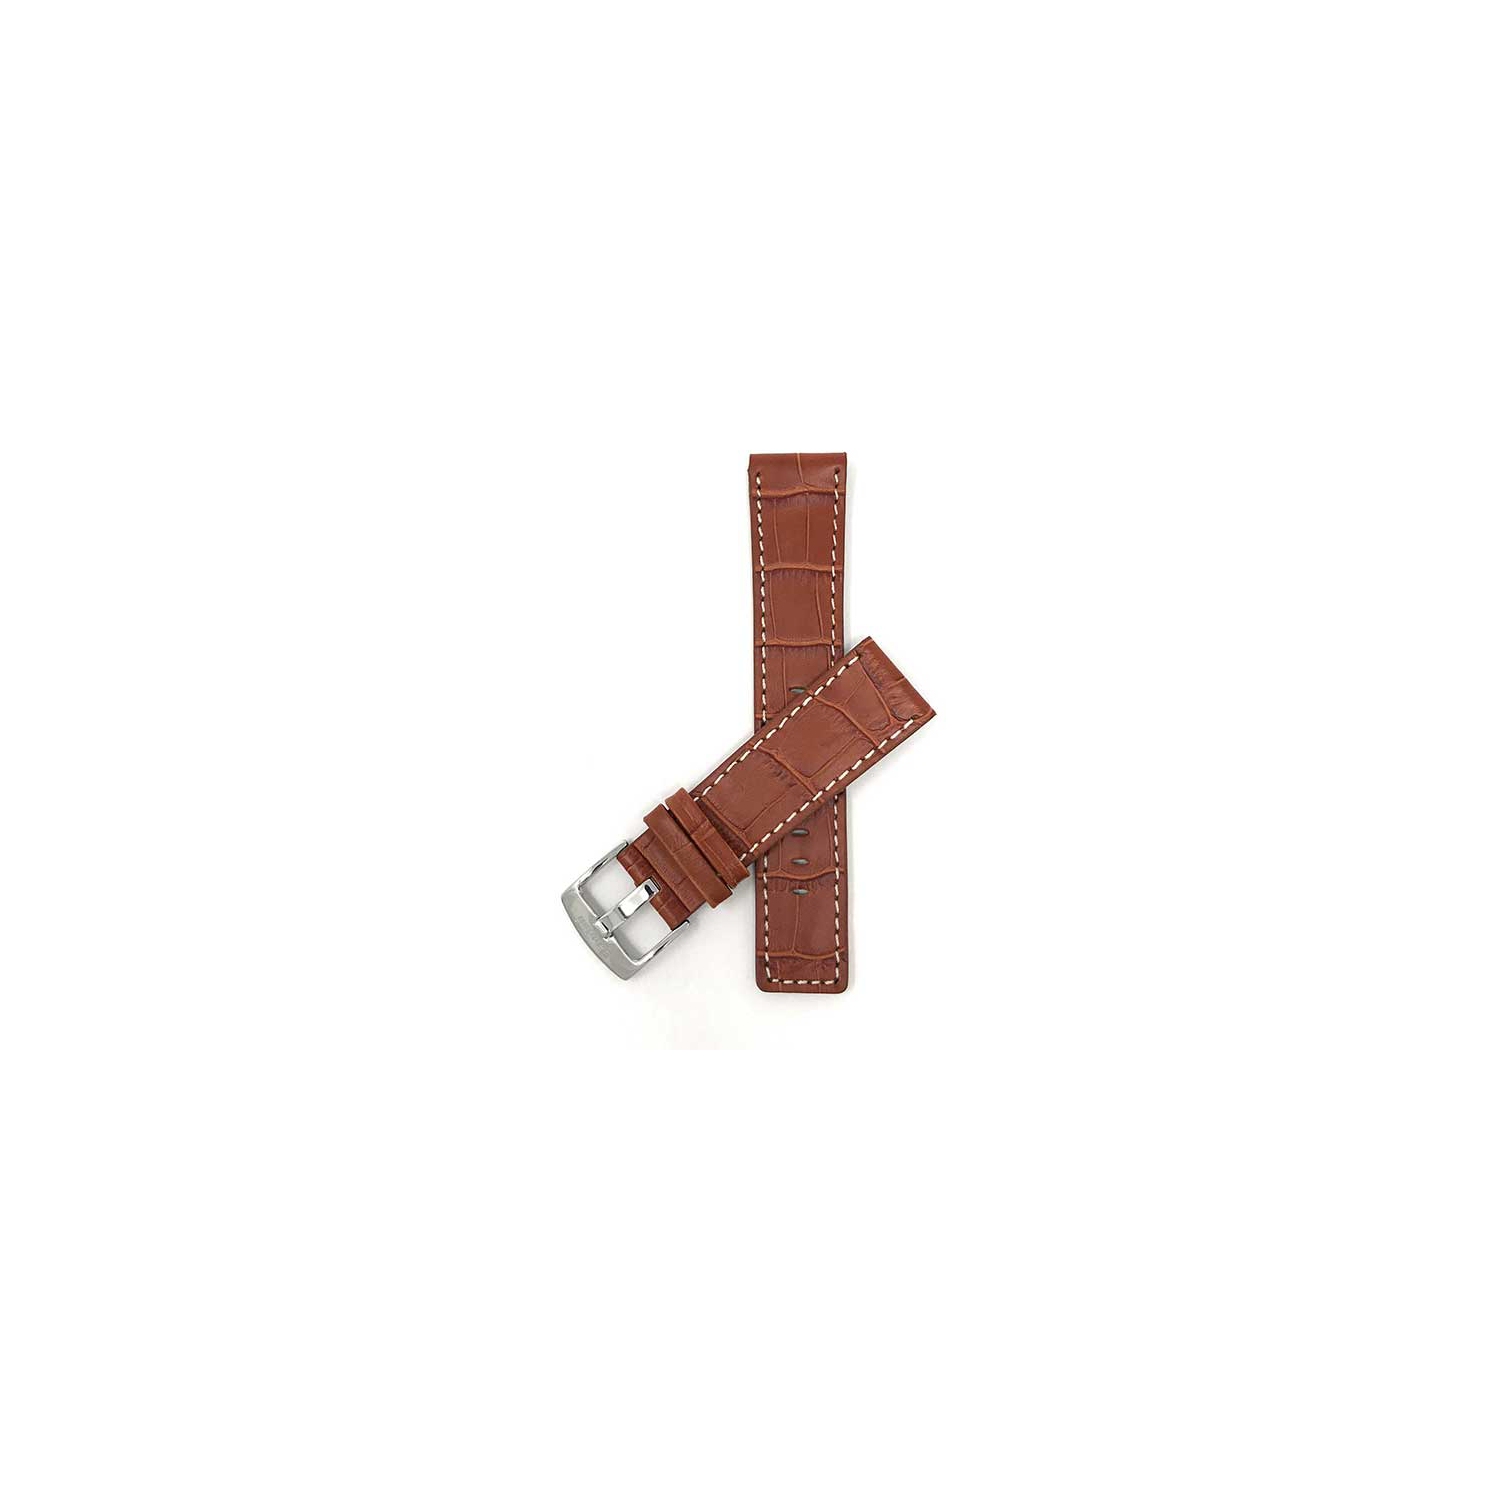 Bandini Square Tip Croco Style Leather Smart Watch Band Strap, White Stitch For Mobvoi Ticwatch E2, S2, Pro, Pro 3 - 22mm, Tan / Silver Buckle